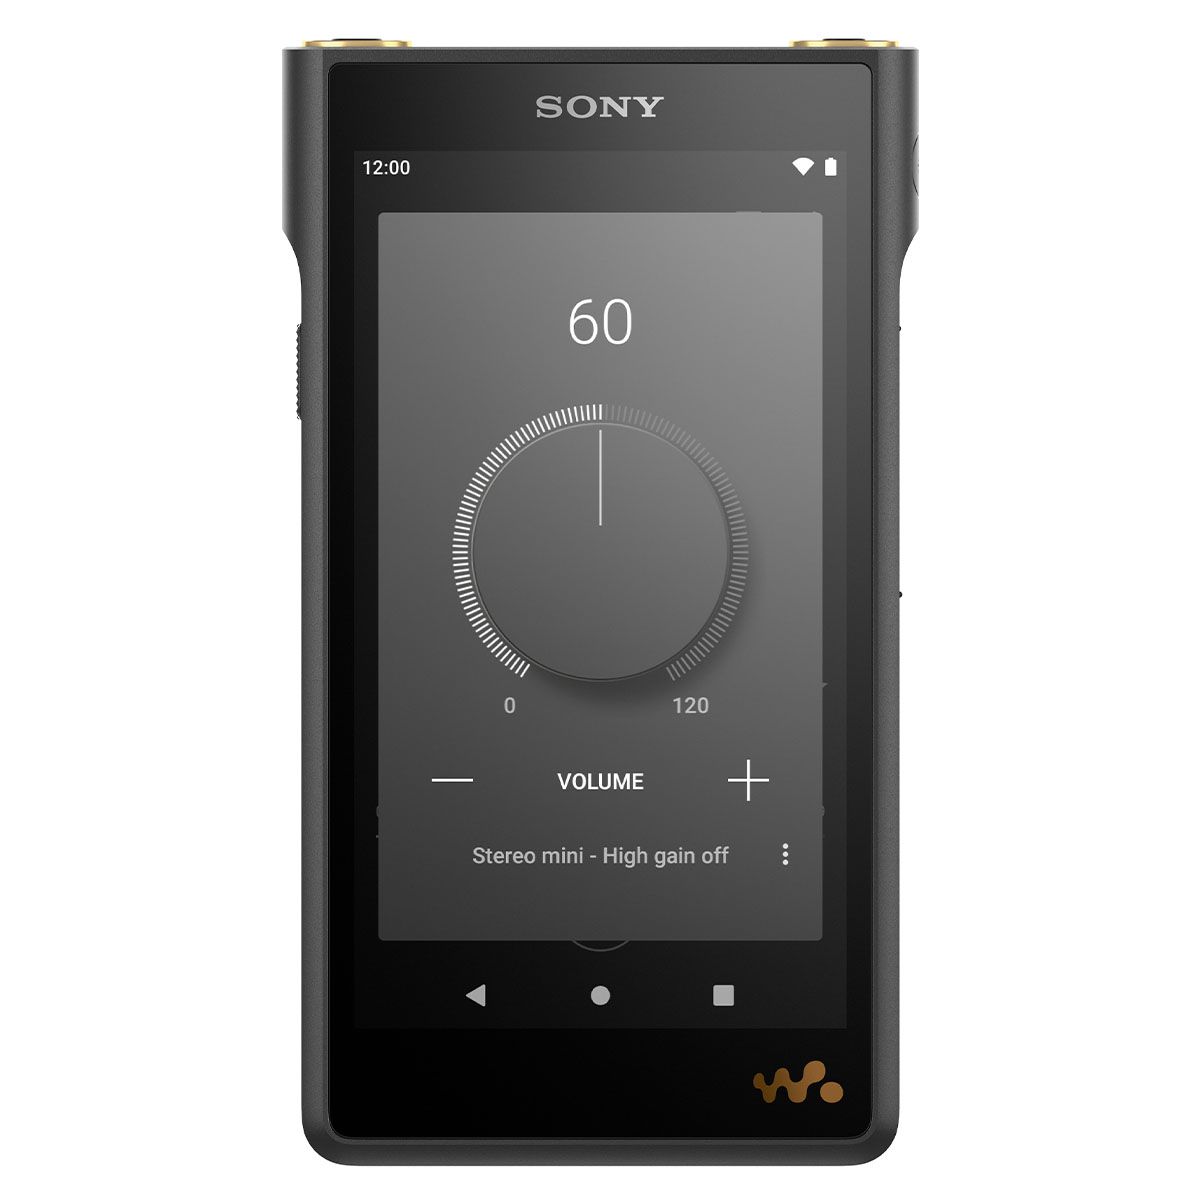 Sony WM1AM2 Walkman Digital Music Player - front view showing volume control